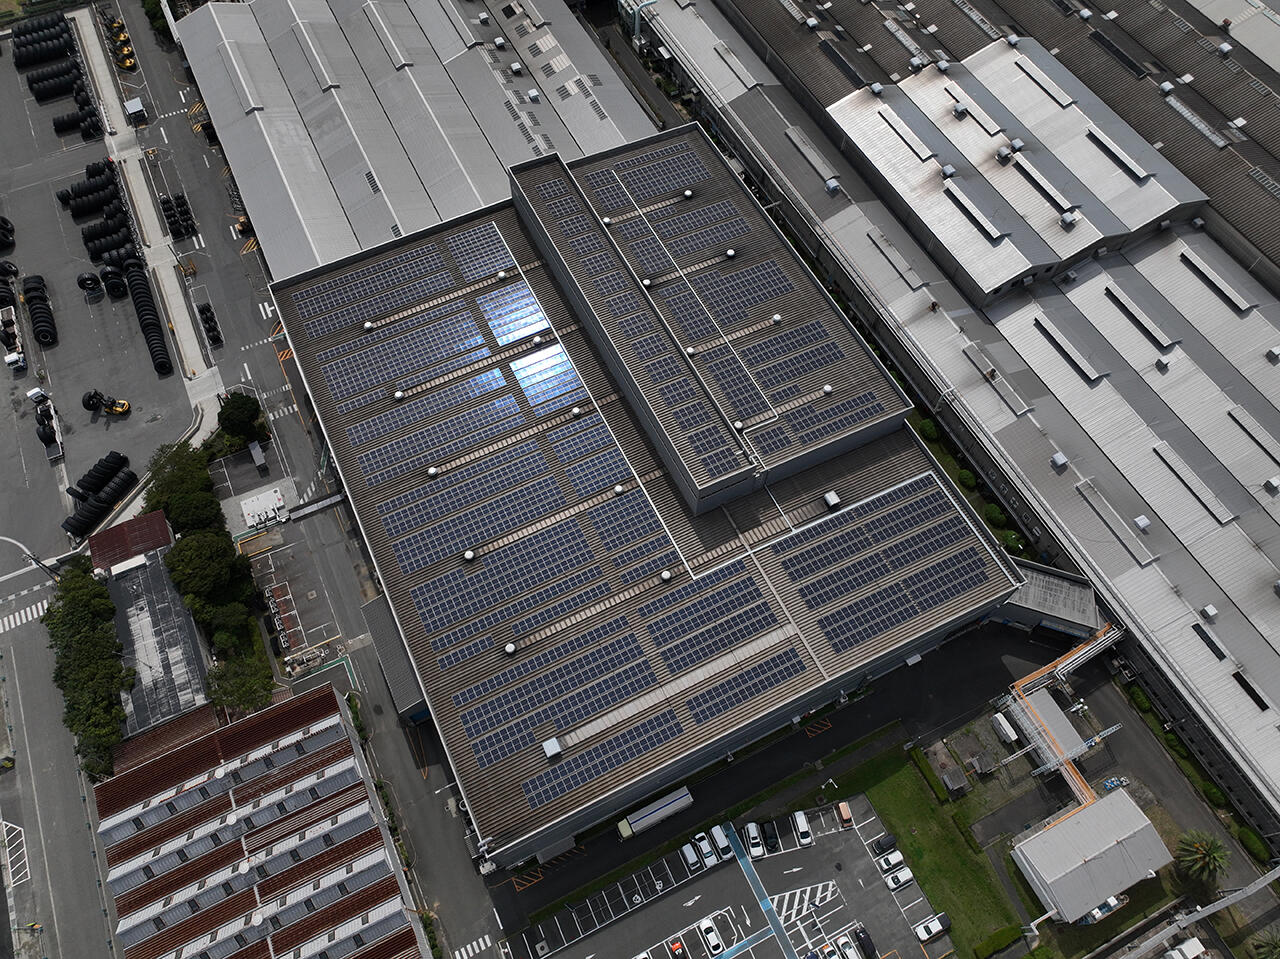 Rooftop solar panels at Shimonoseki Plant